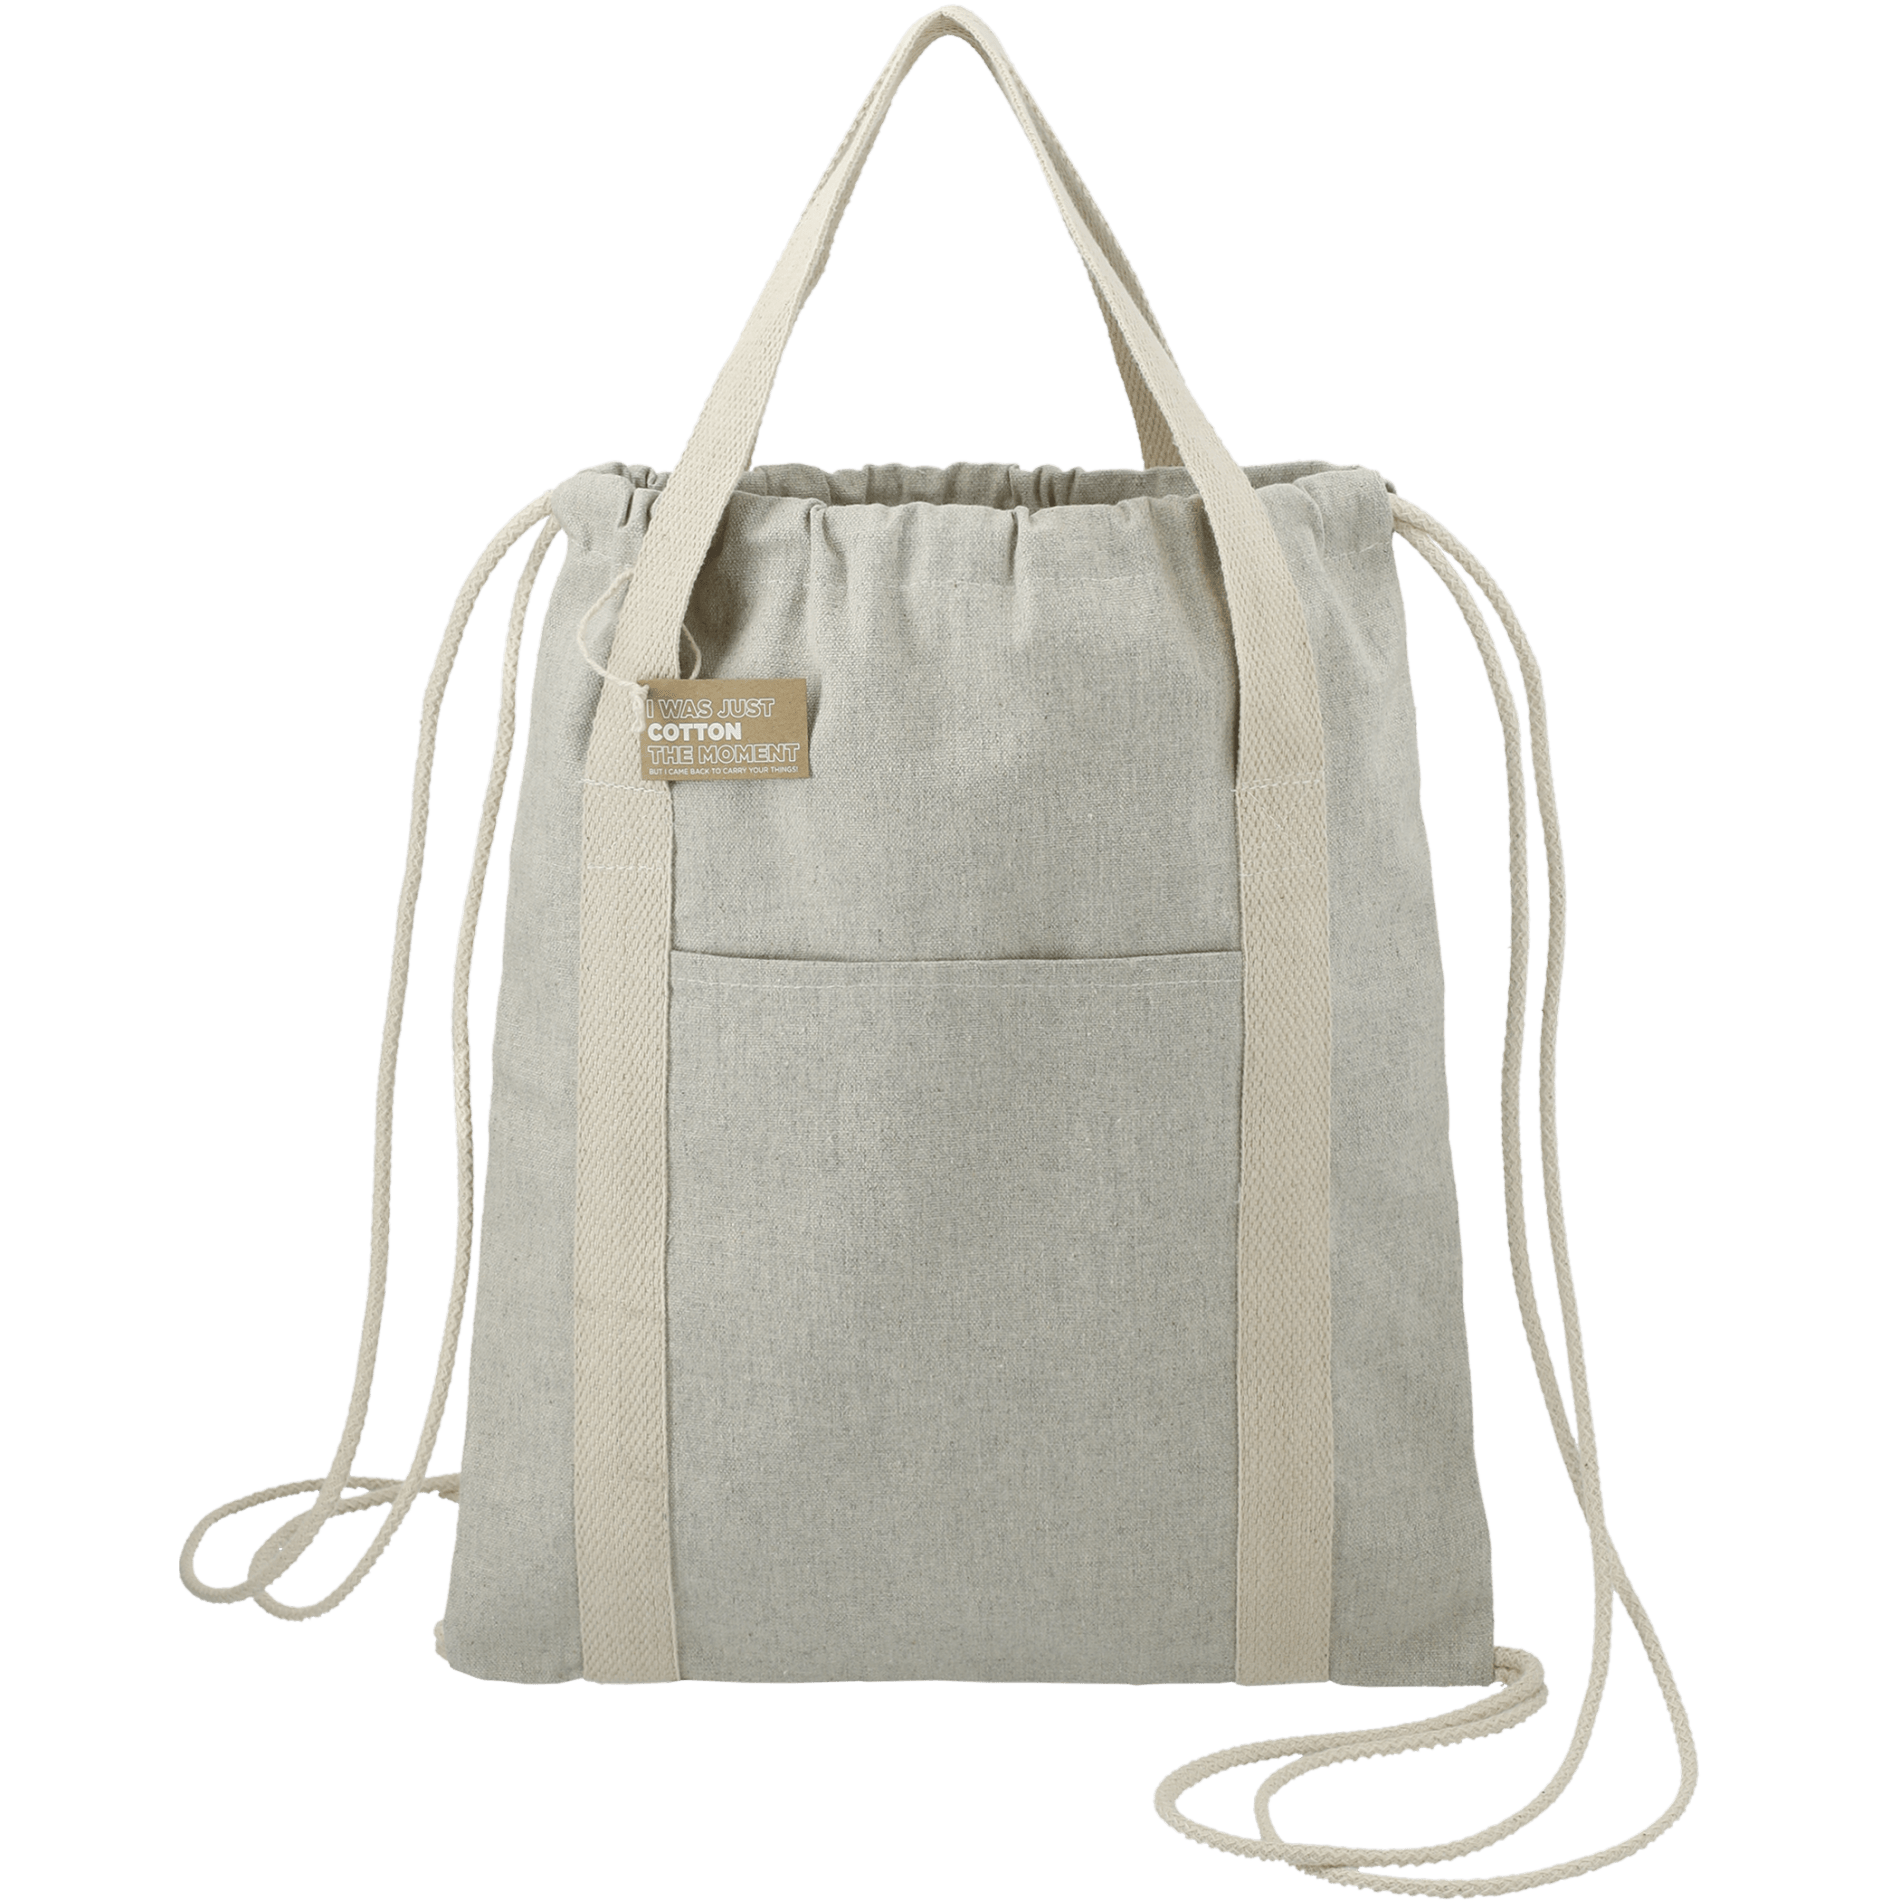 LEEDS 3005-75 - Repose 5oz. Recycled Cotton Drawstring Bag